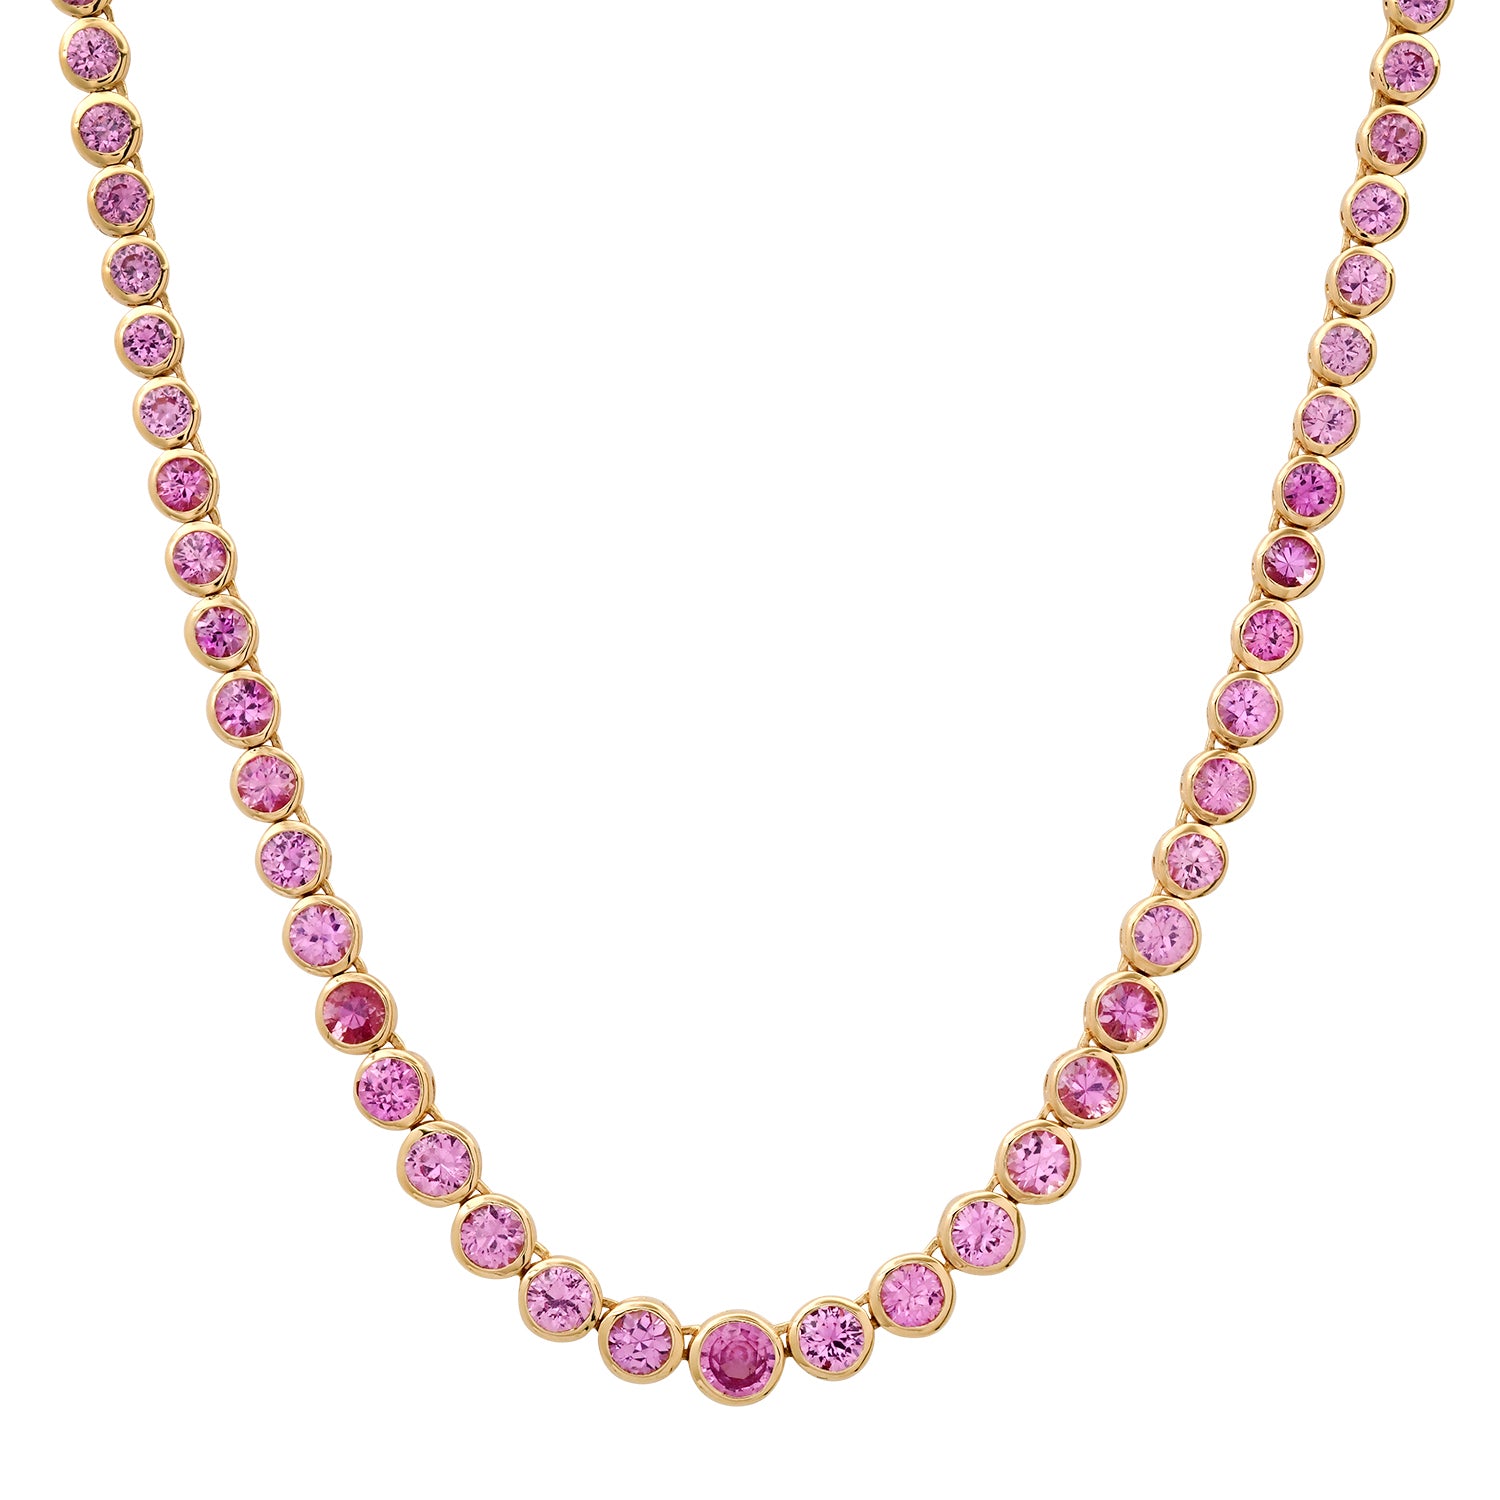 Graduated Bezel Set Pink Sapphire Tennis Necklace